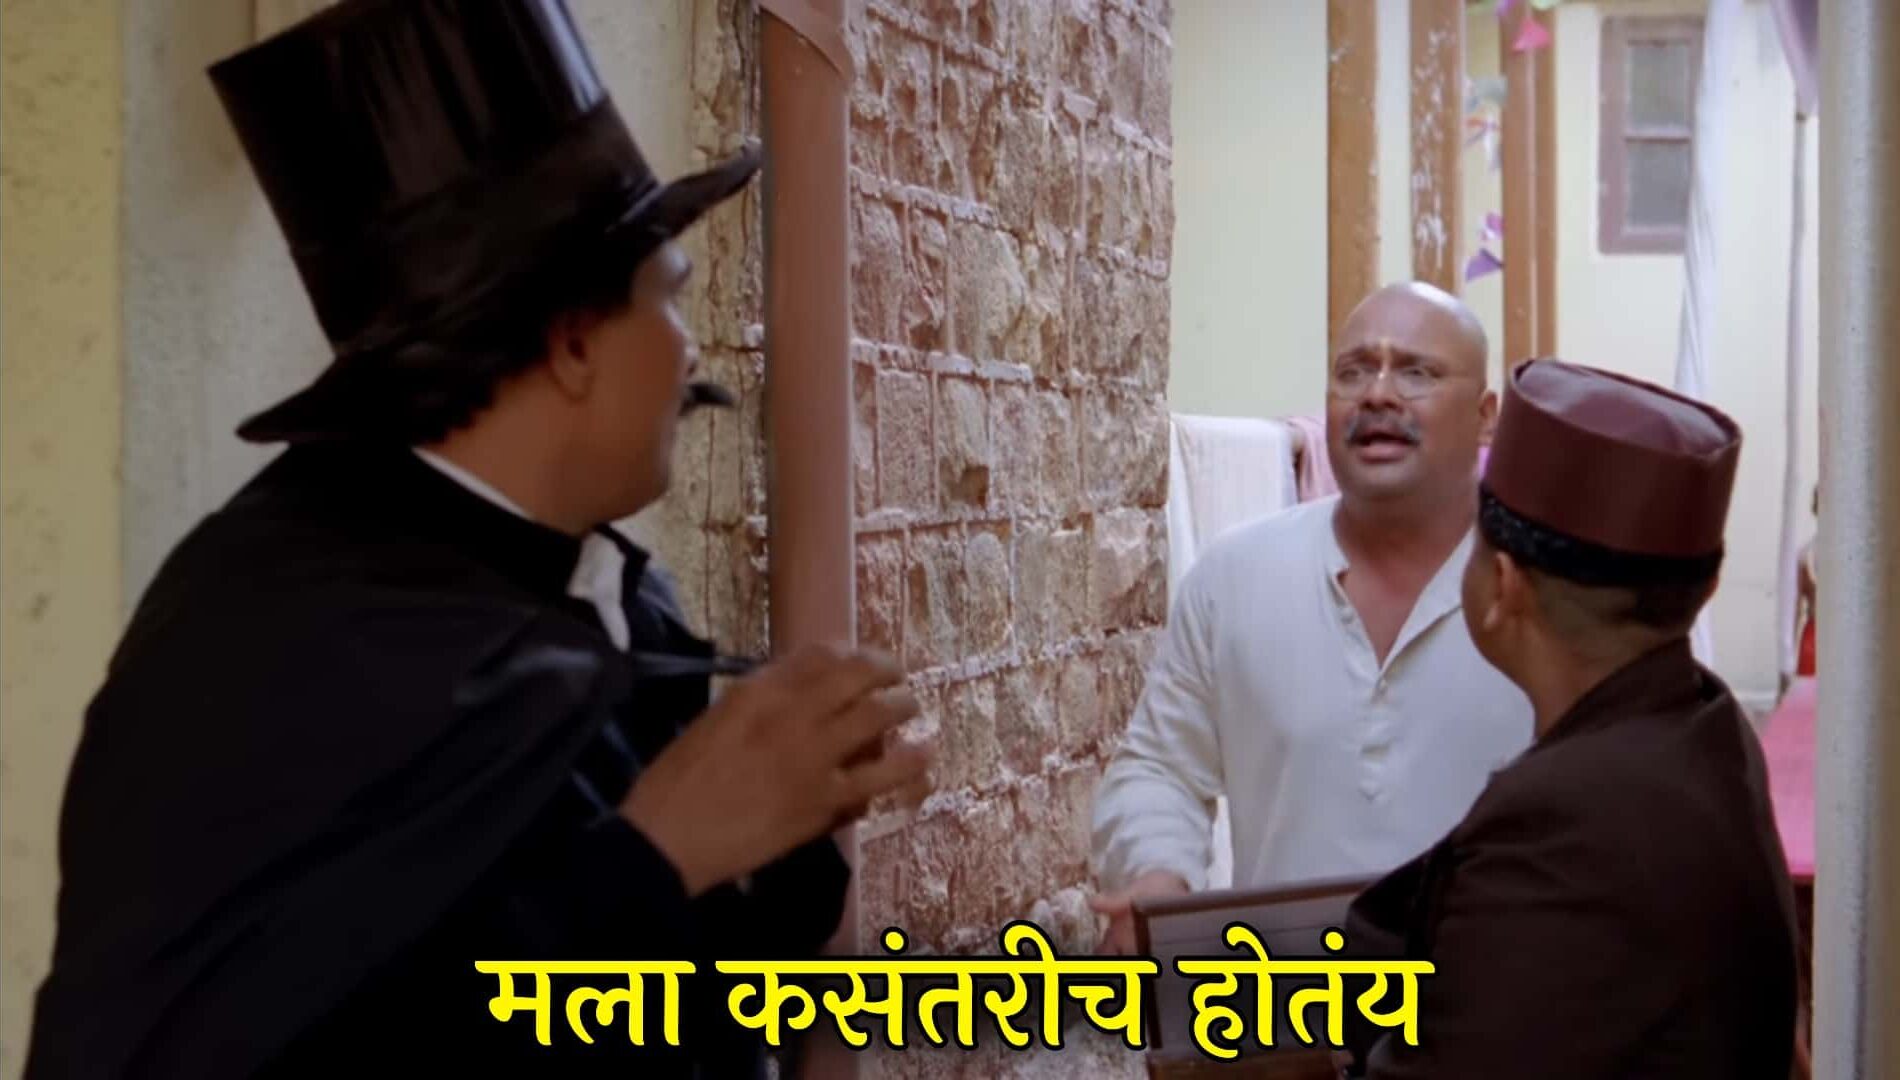 Harishchandrachi Factory Marathi Movie Meme Templates